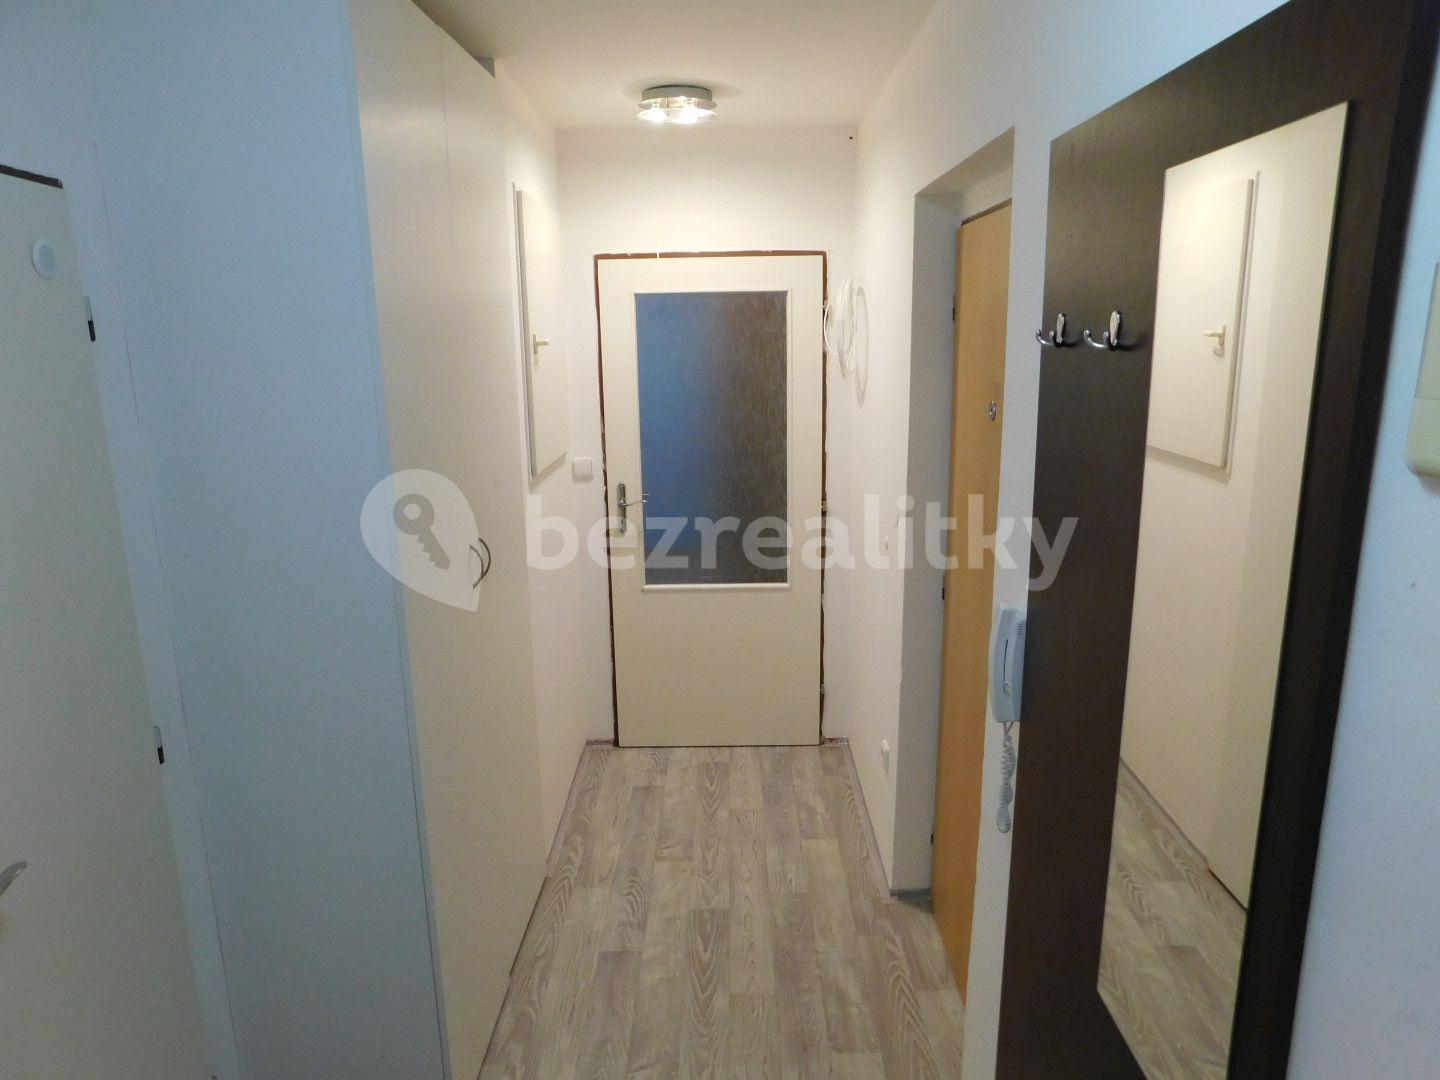 Predaj bytu 2-izbový 44 m², Brandlova, Hodonín, Jihomoravský kraj